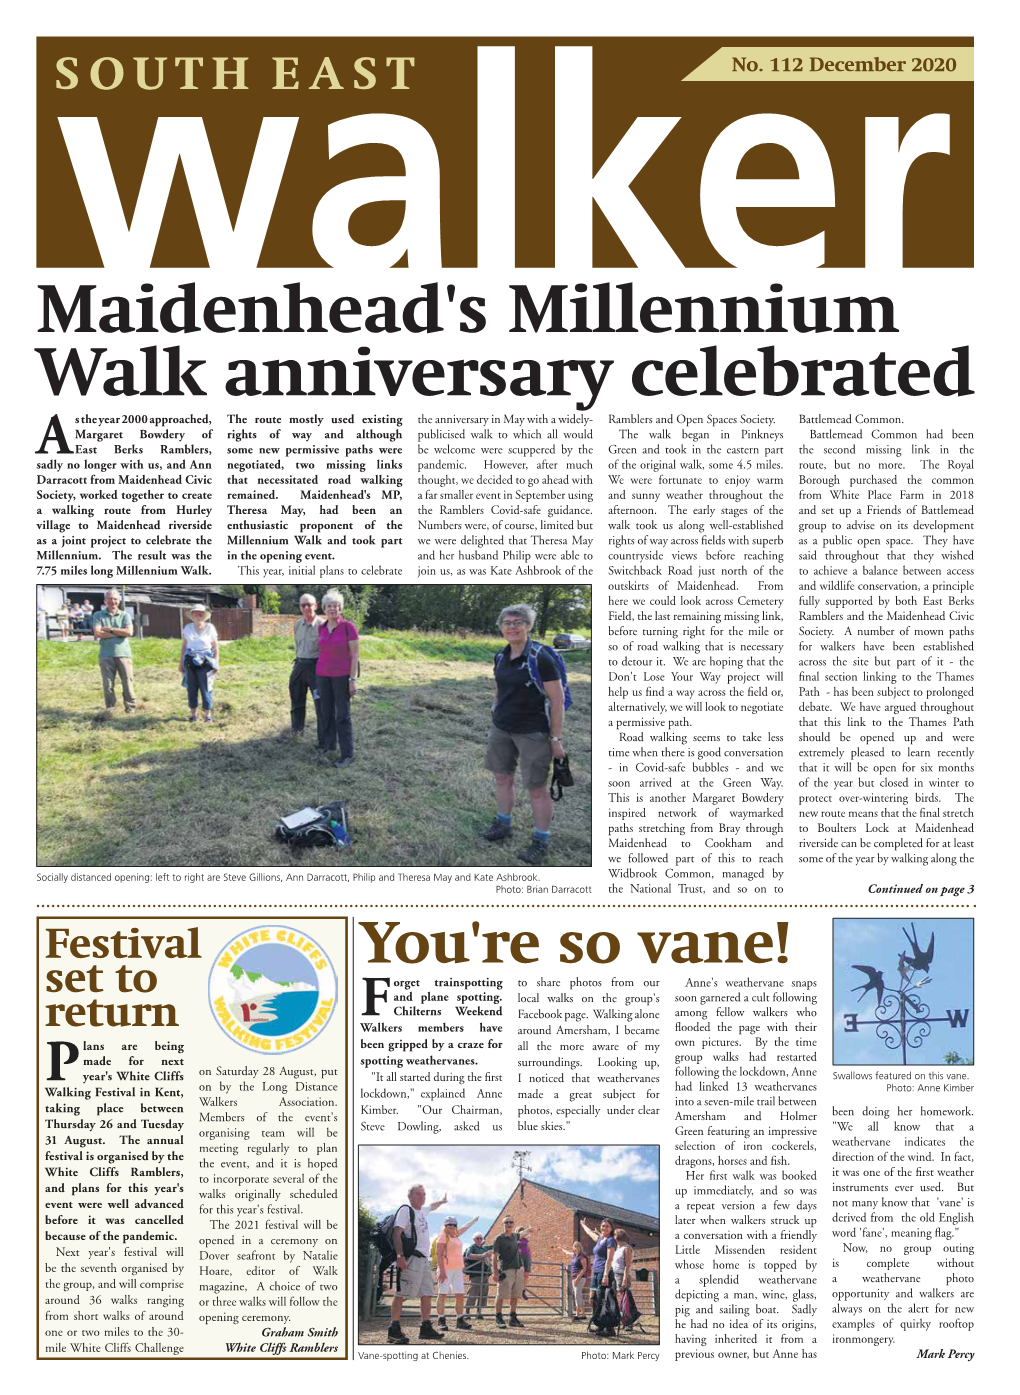 Maidenhead's Millennium Walk Anniversary Celebrated